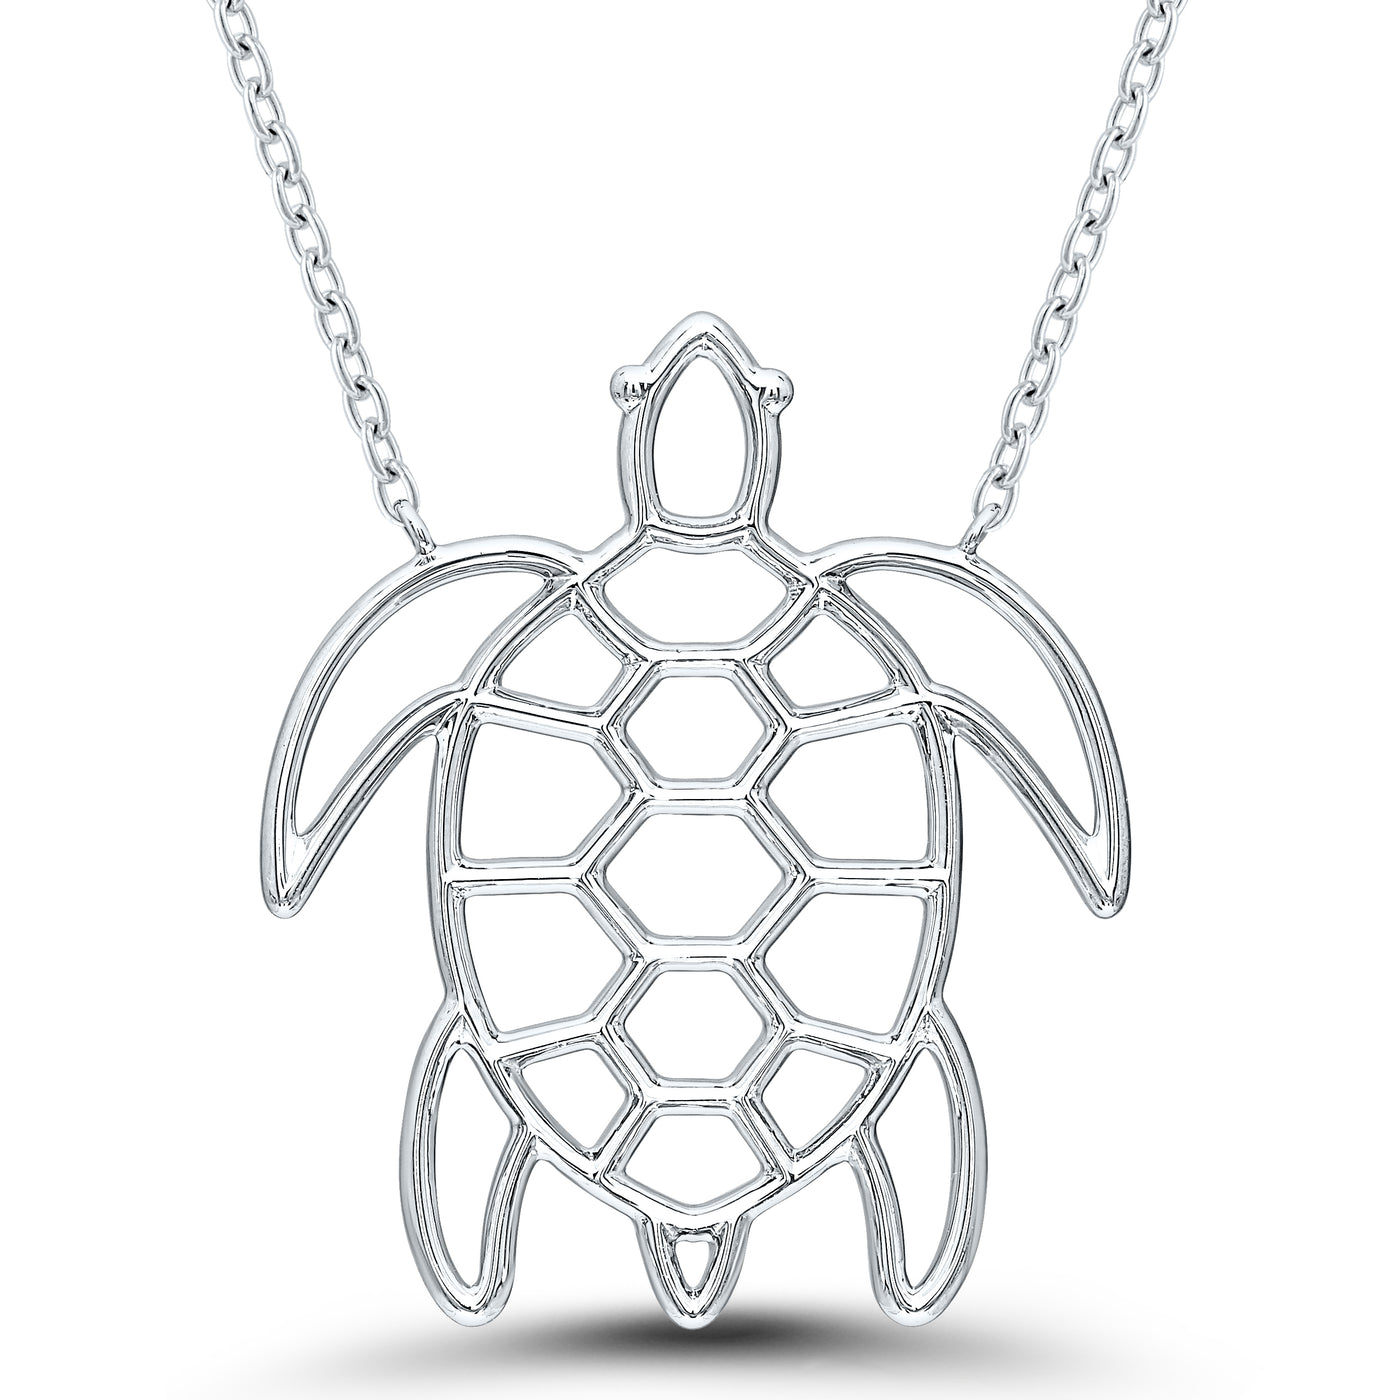 The Australian Turtle Necklace